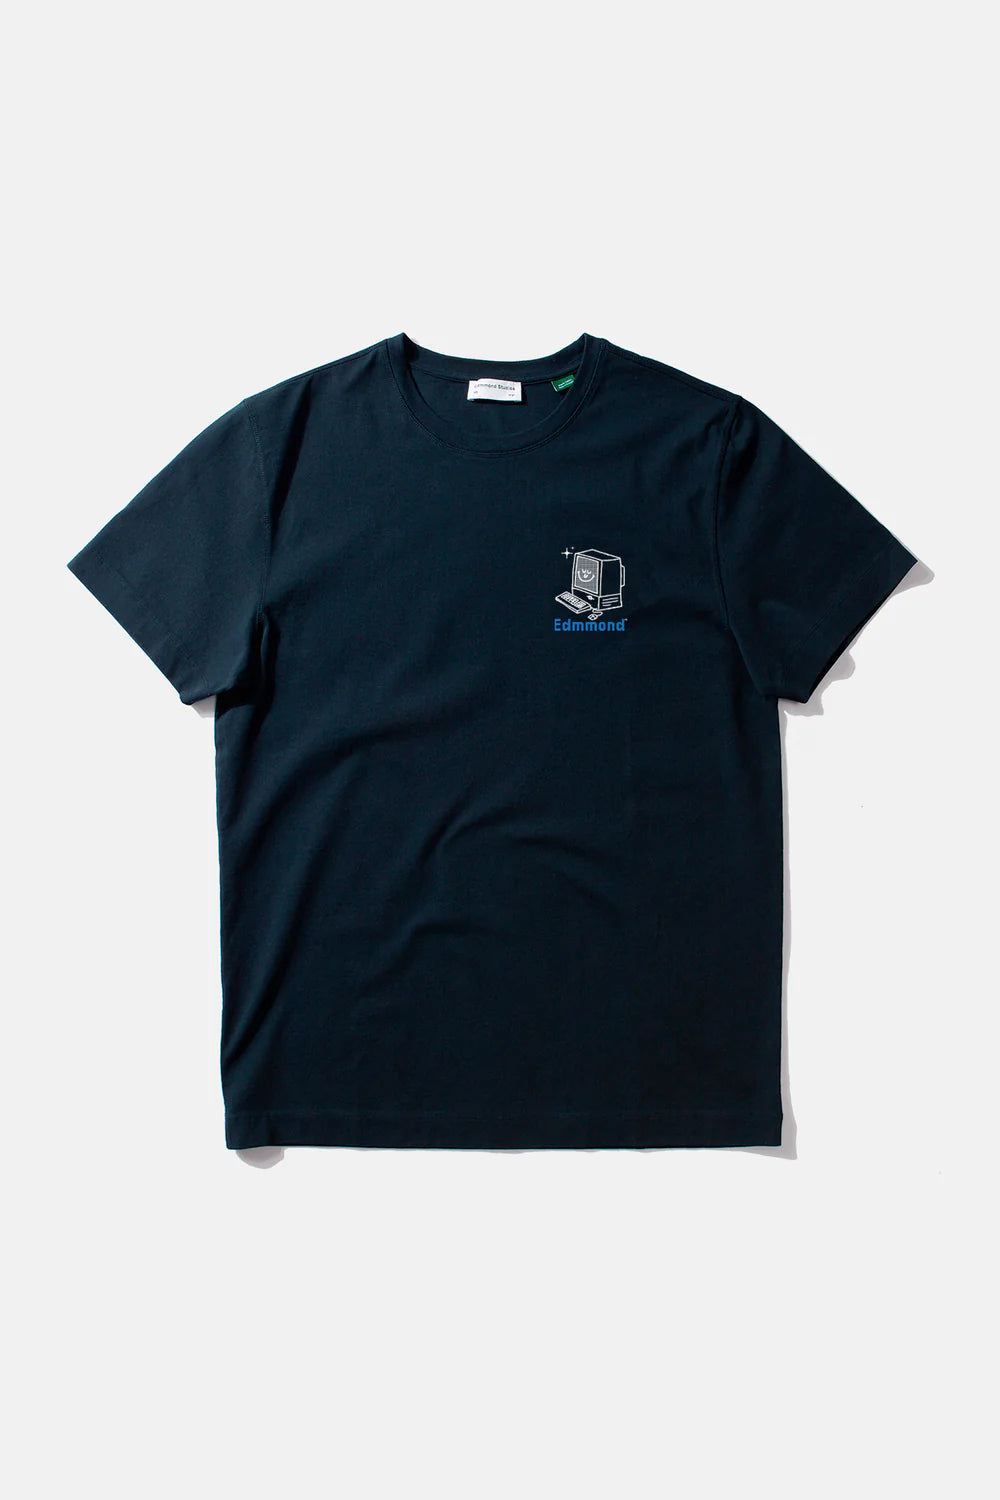 Edmmond Studios Log Off Navy T-Shirt